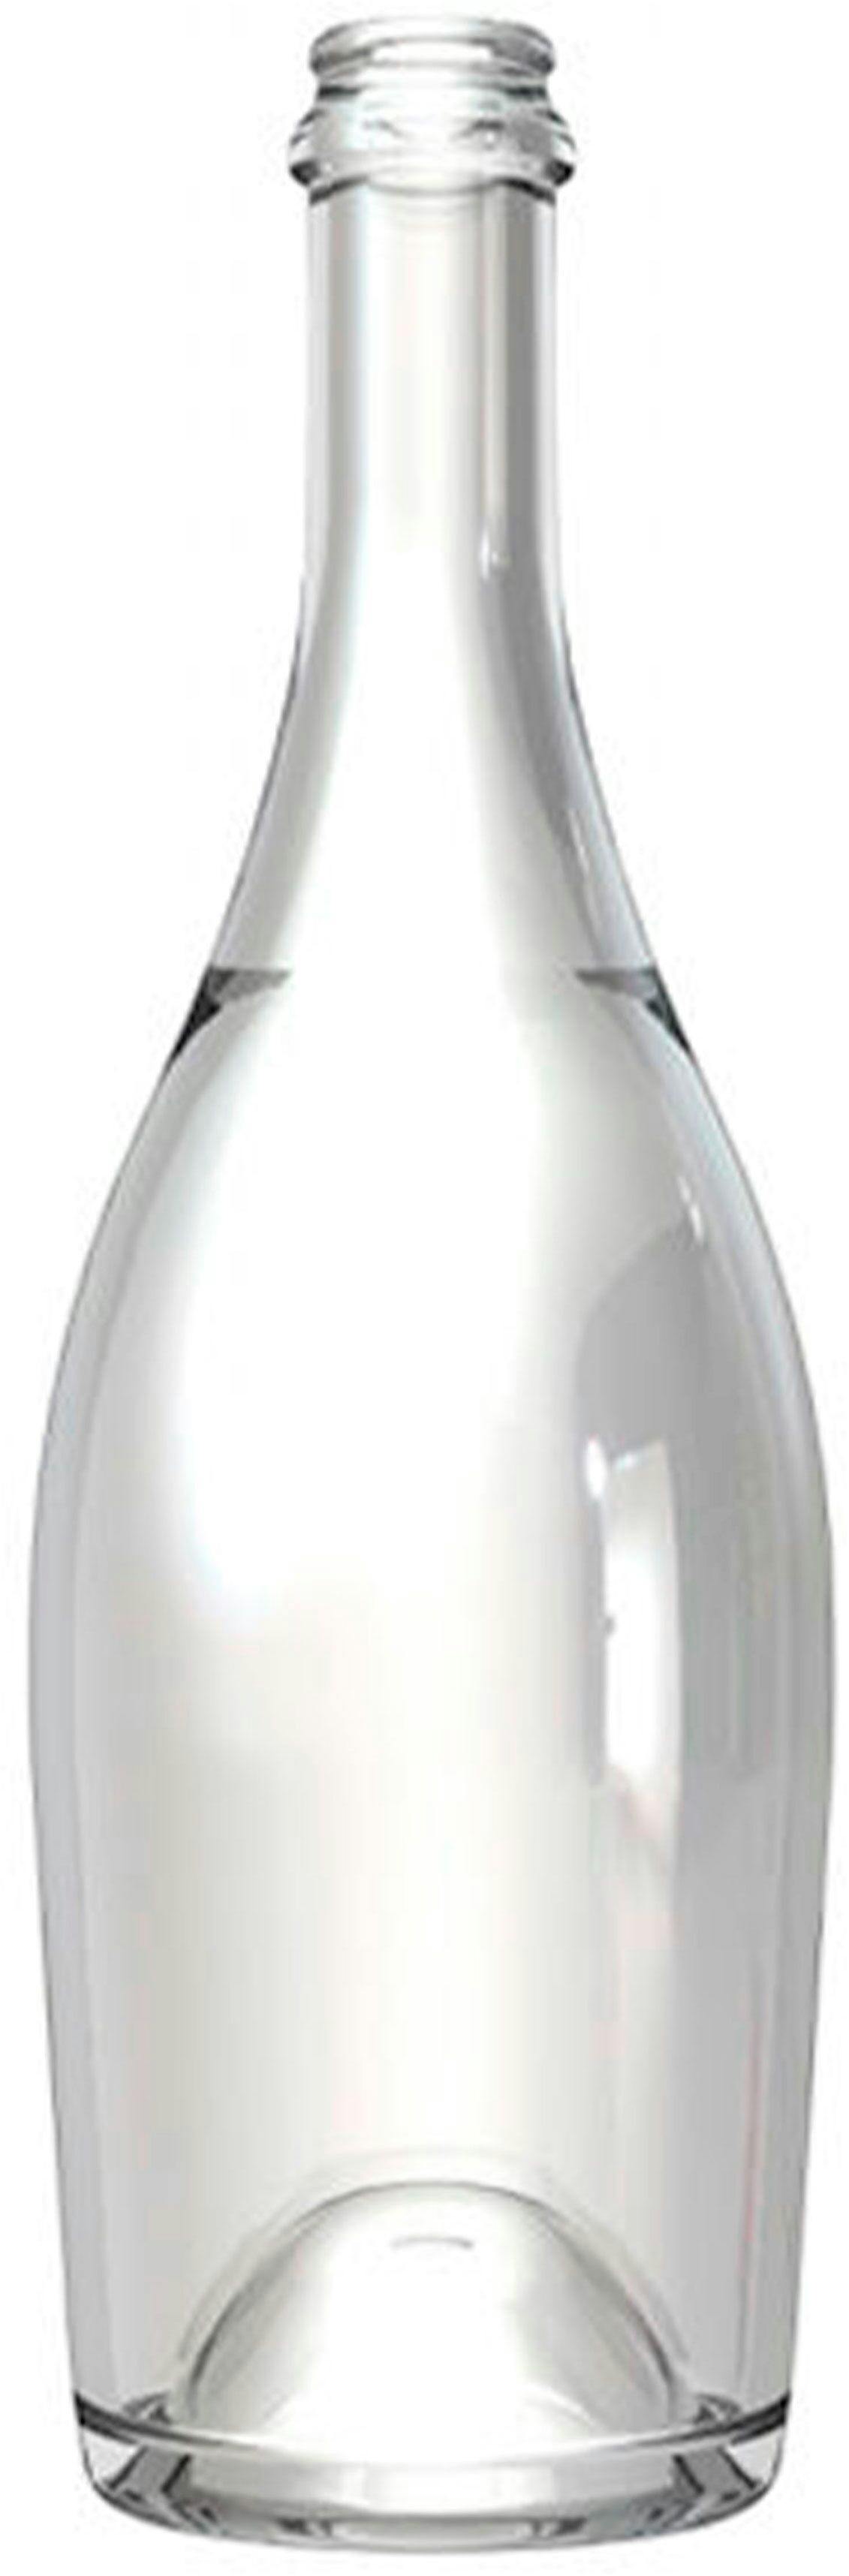 Botella CHAMP  COLLIO 750 ml Corona 29 ExtraBaja - 18mm